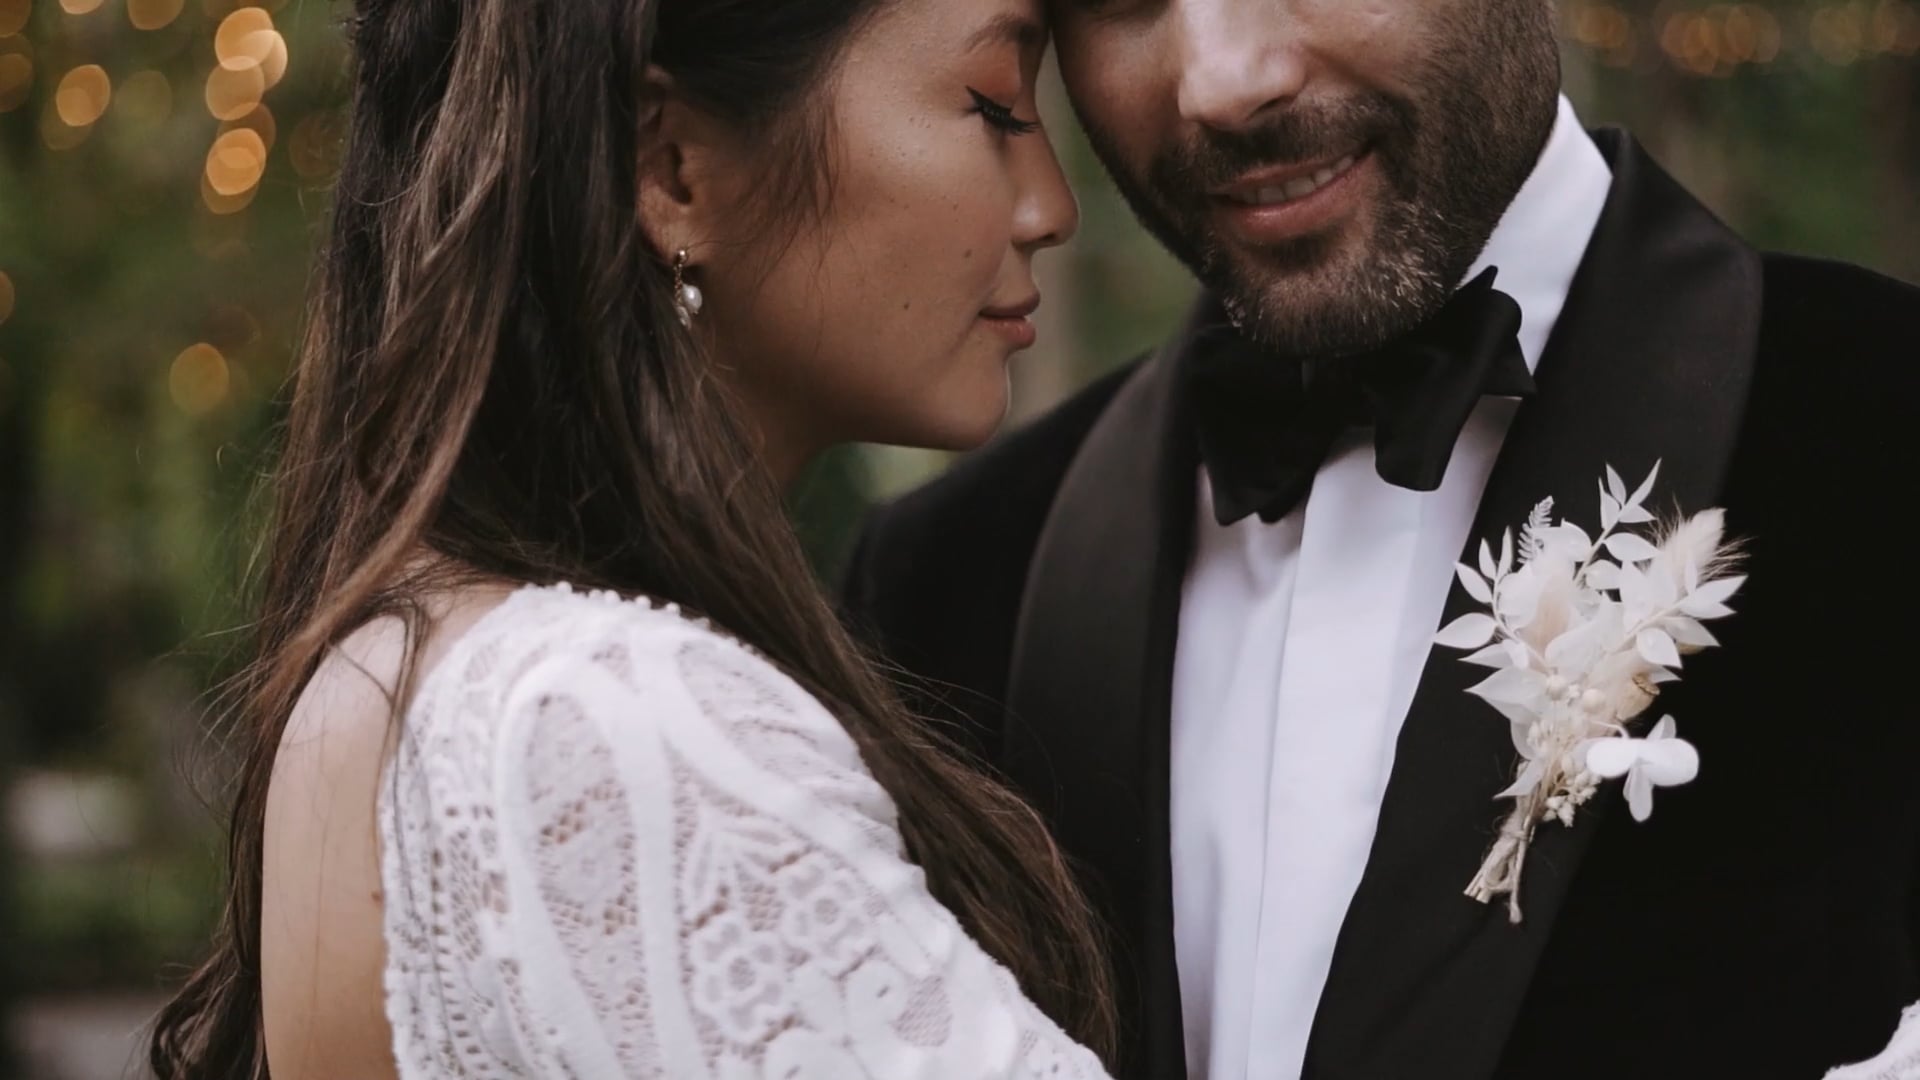 Bao-Y + Klodi | On Another Level [luxury destination wedding video]